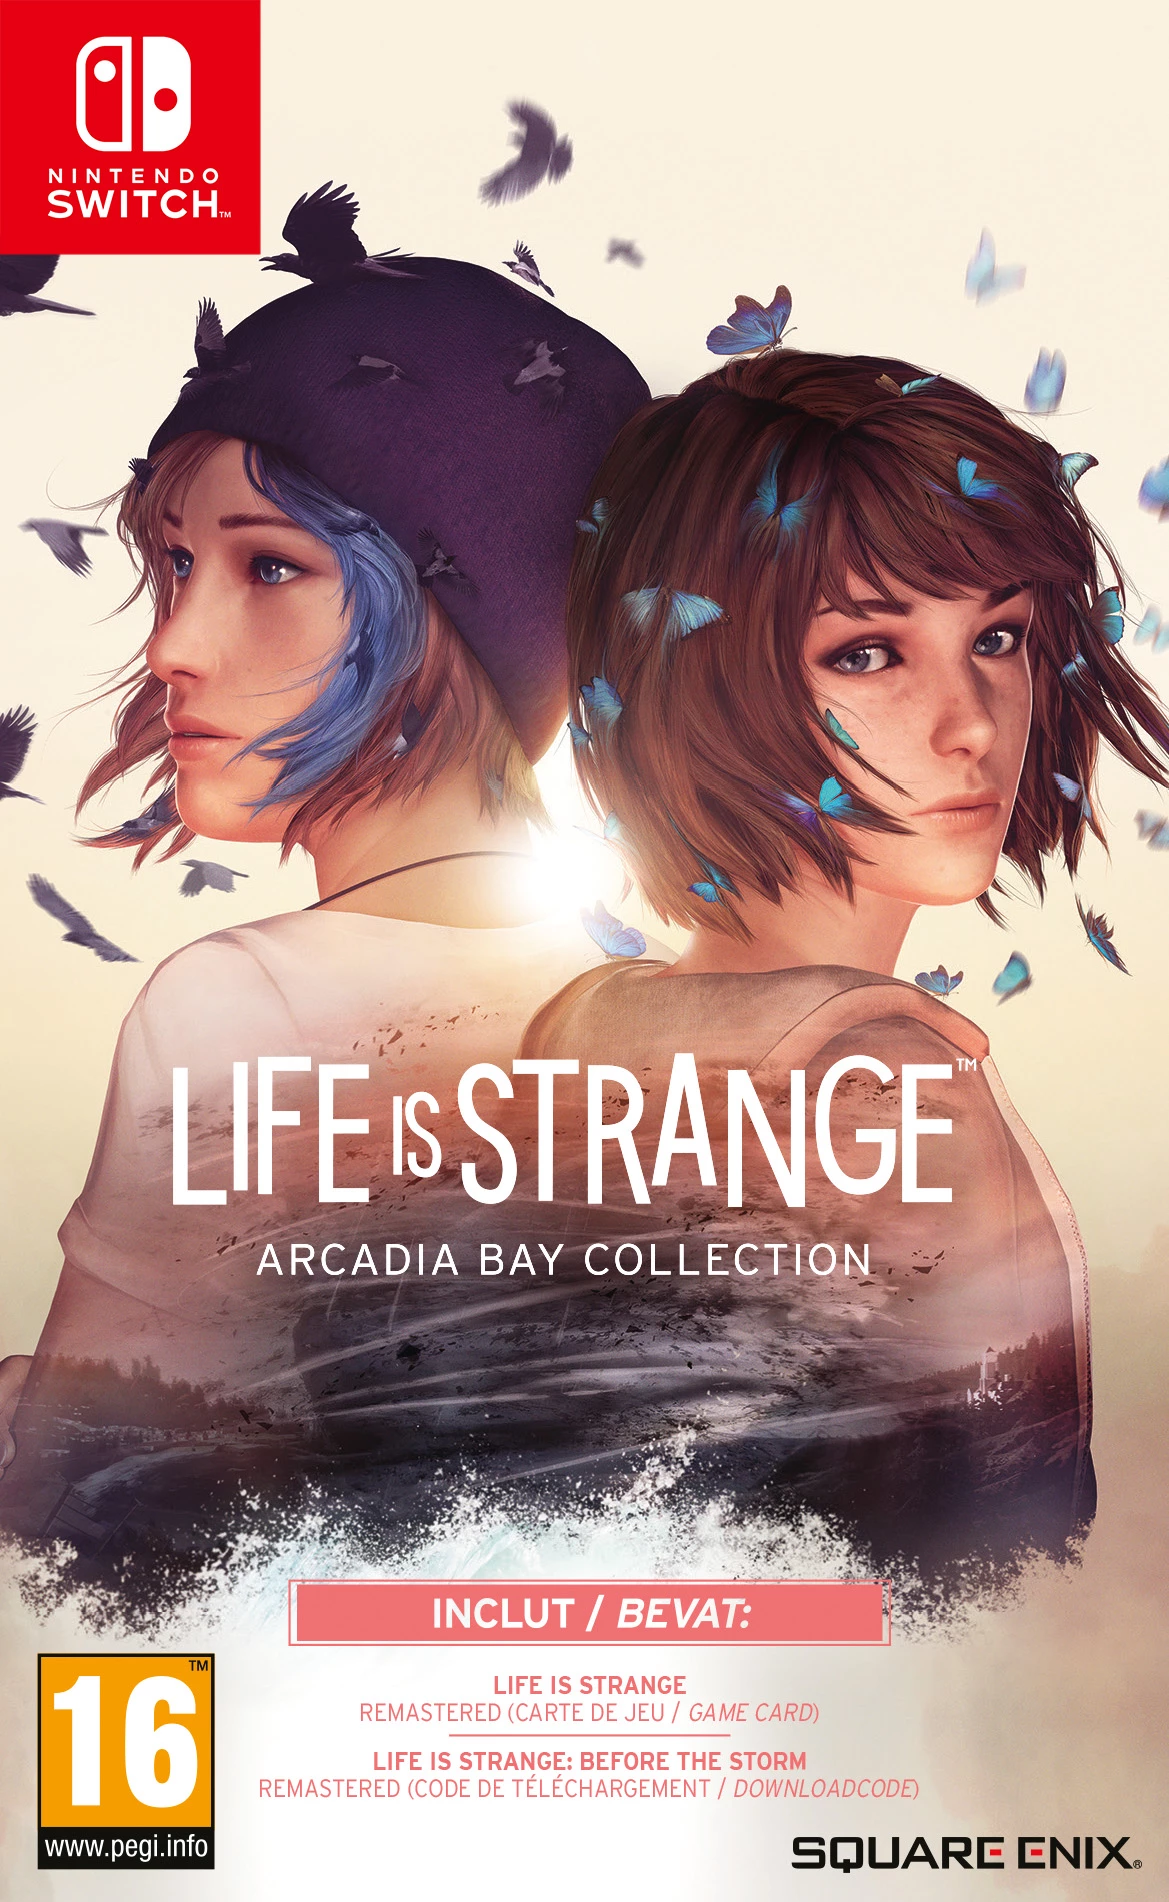 Life is Strange - Arcadia Bay Collection (Switch), Square Enix